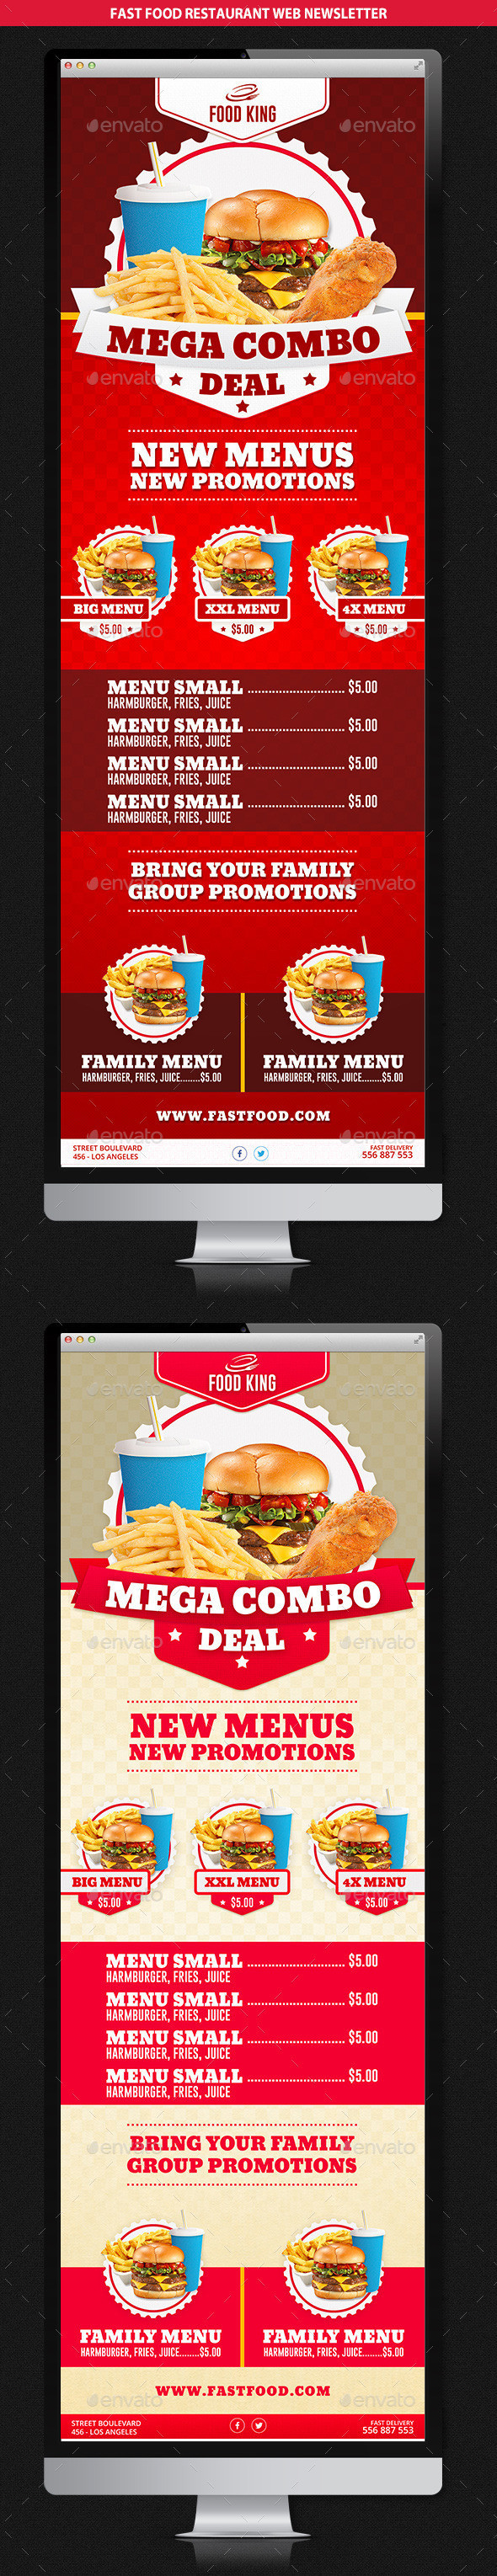 Restaurant fast food web newsletter showcase